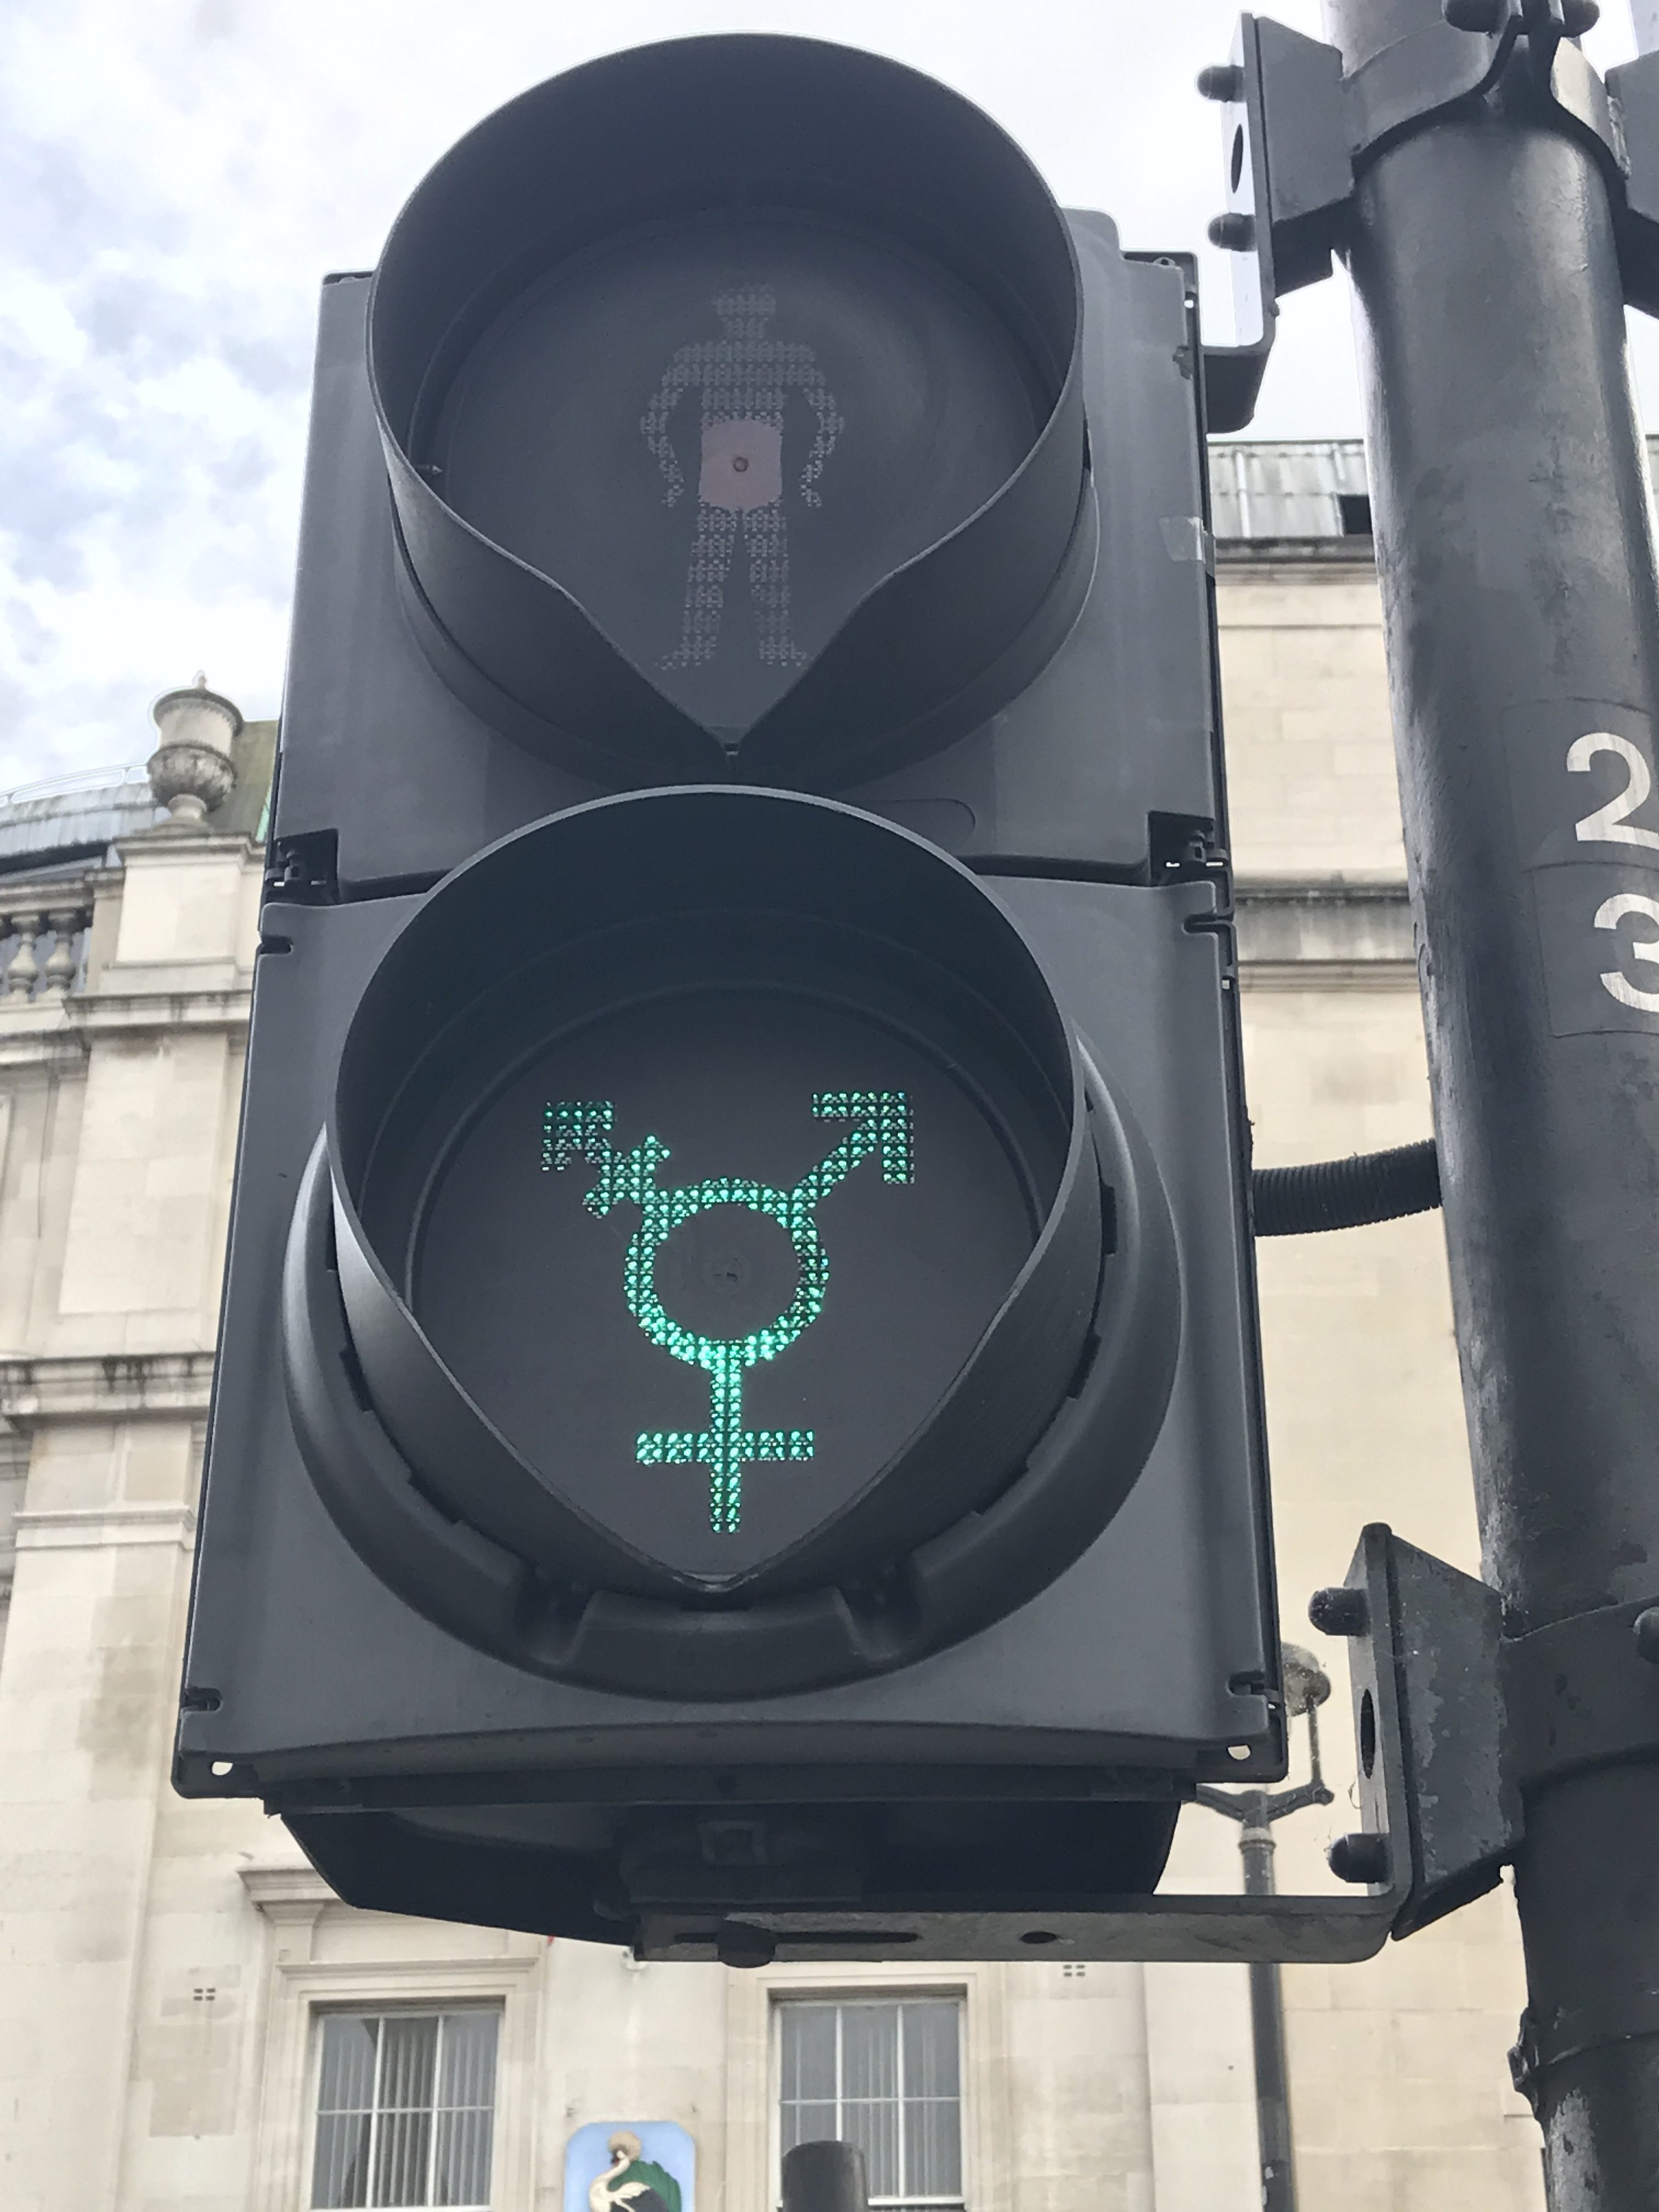 All-gender walk sign in London Philip Greenspun's